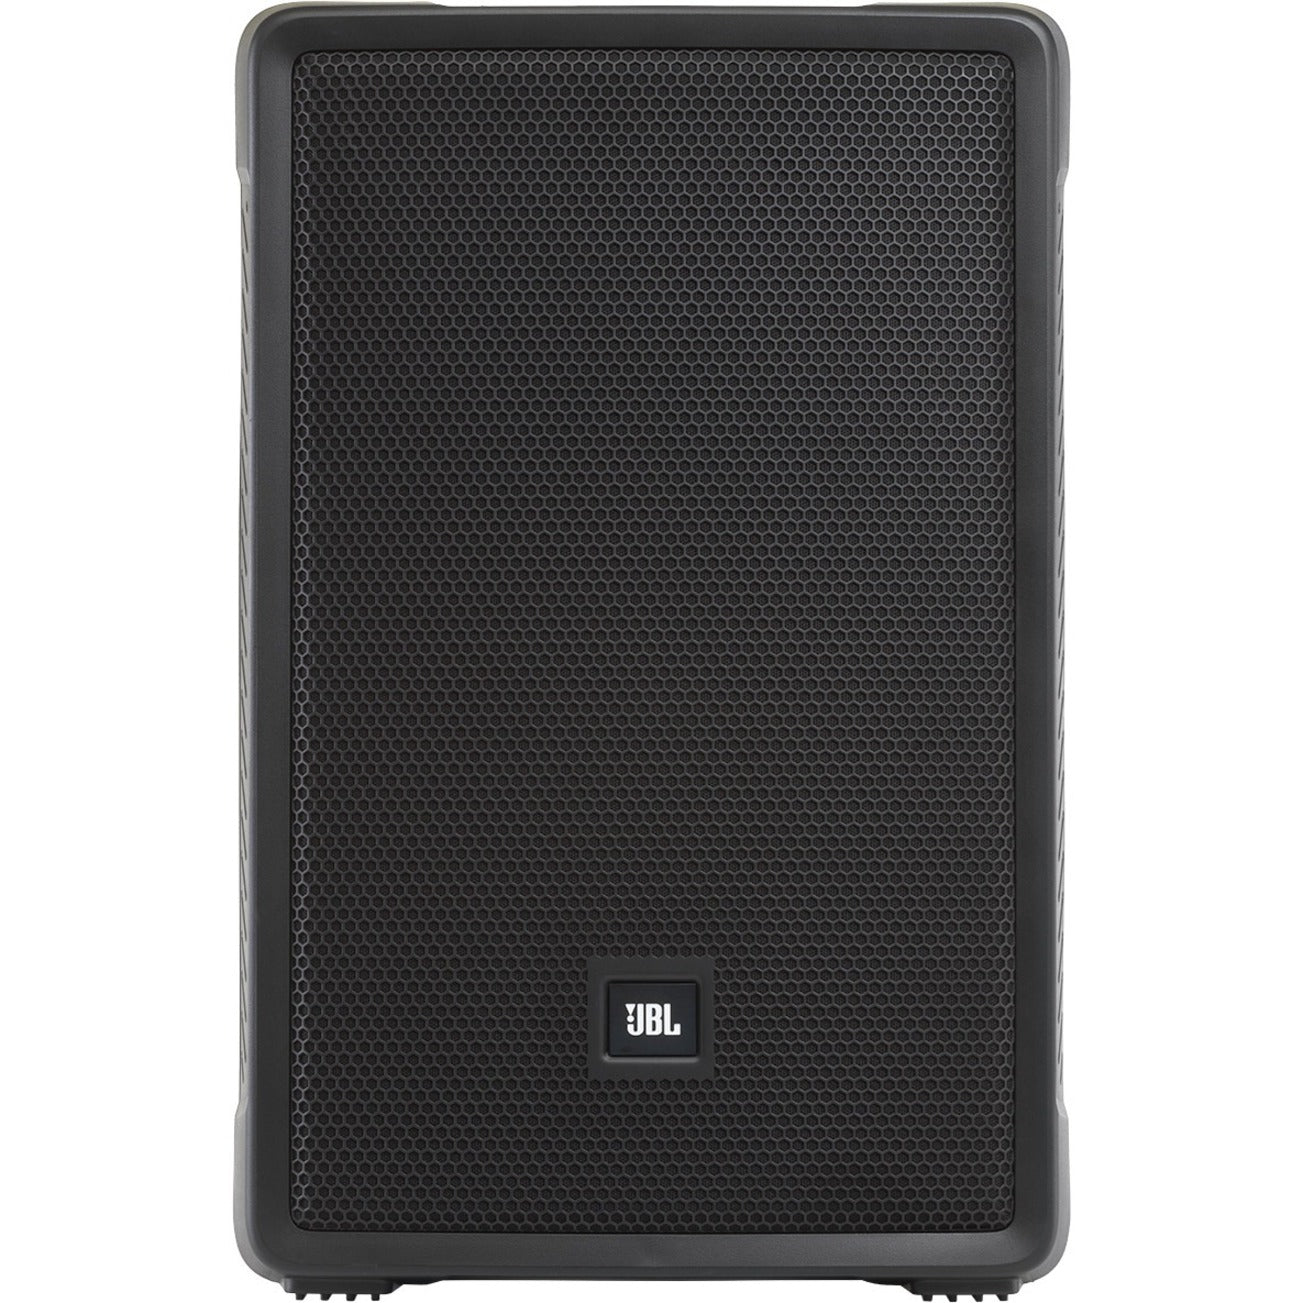 JBL Professional IRX112BT-NA IRX112BT Powered 12" Portable Speaker with Bluetooth, 300W RMS Output Power, Wireless Speaker, Crystal Clear Clarity, Ergonomic Handle